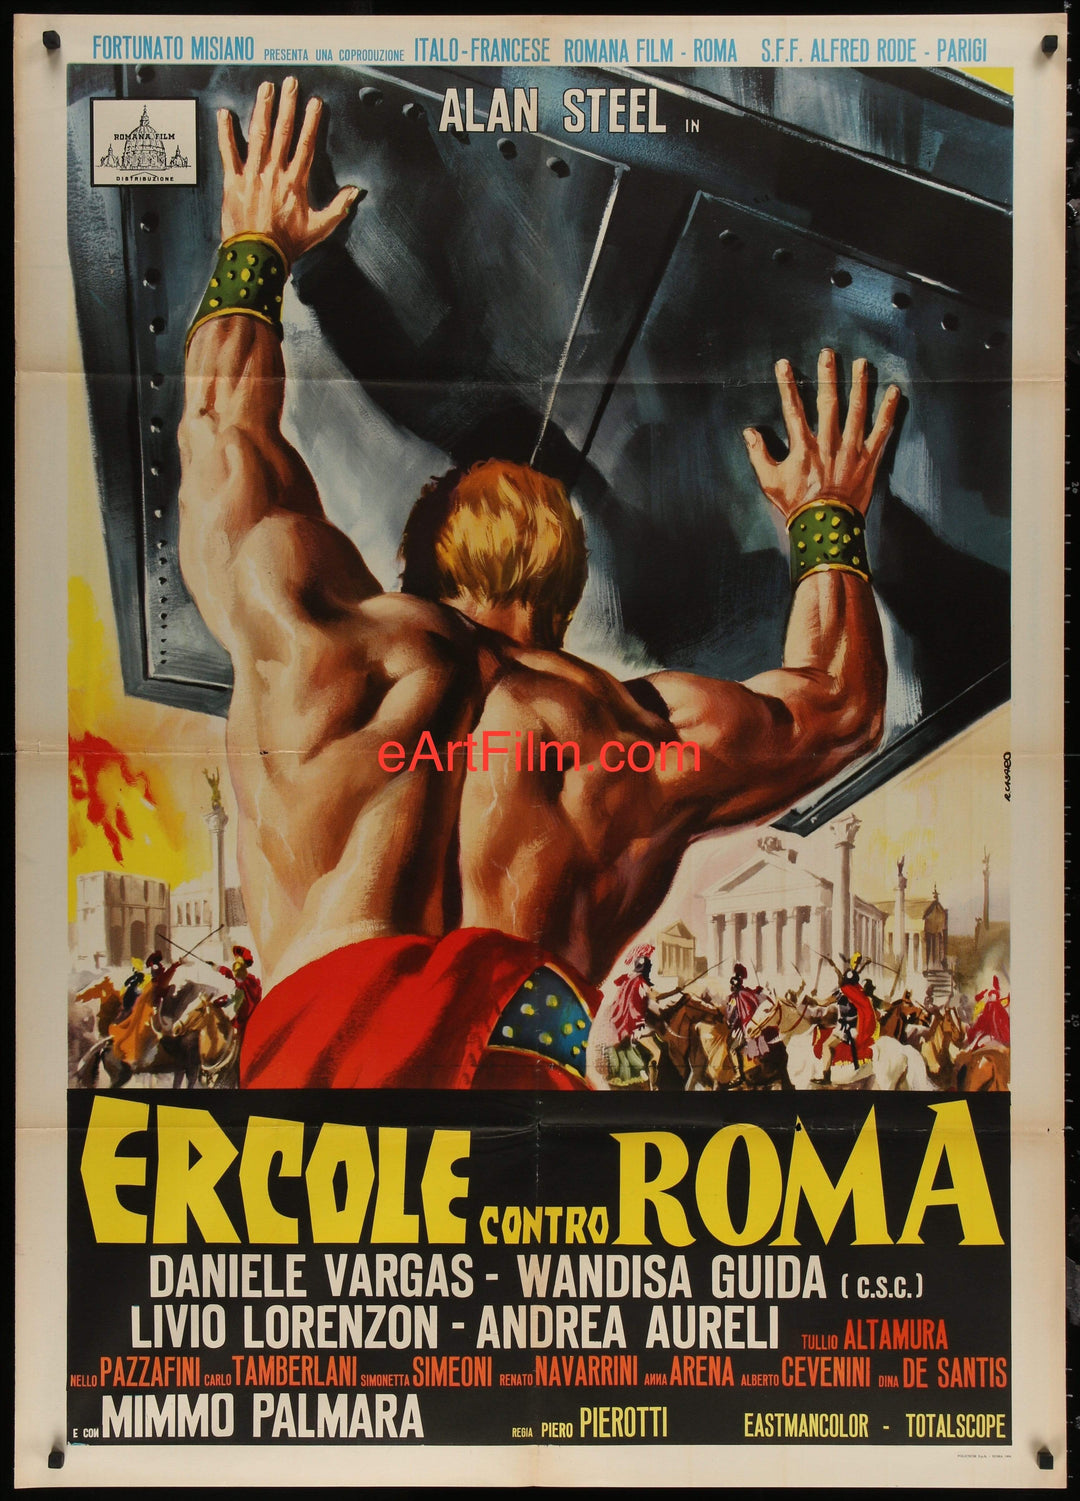 eArtFilm.com Italian 1 Panel (39"x55") 2 Fogli Hercules Against Rome 1964 39x55 Casaro artwork sword and sandal adventure